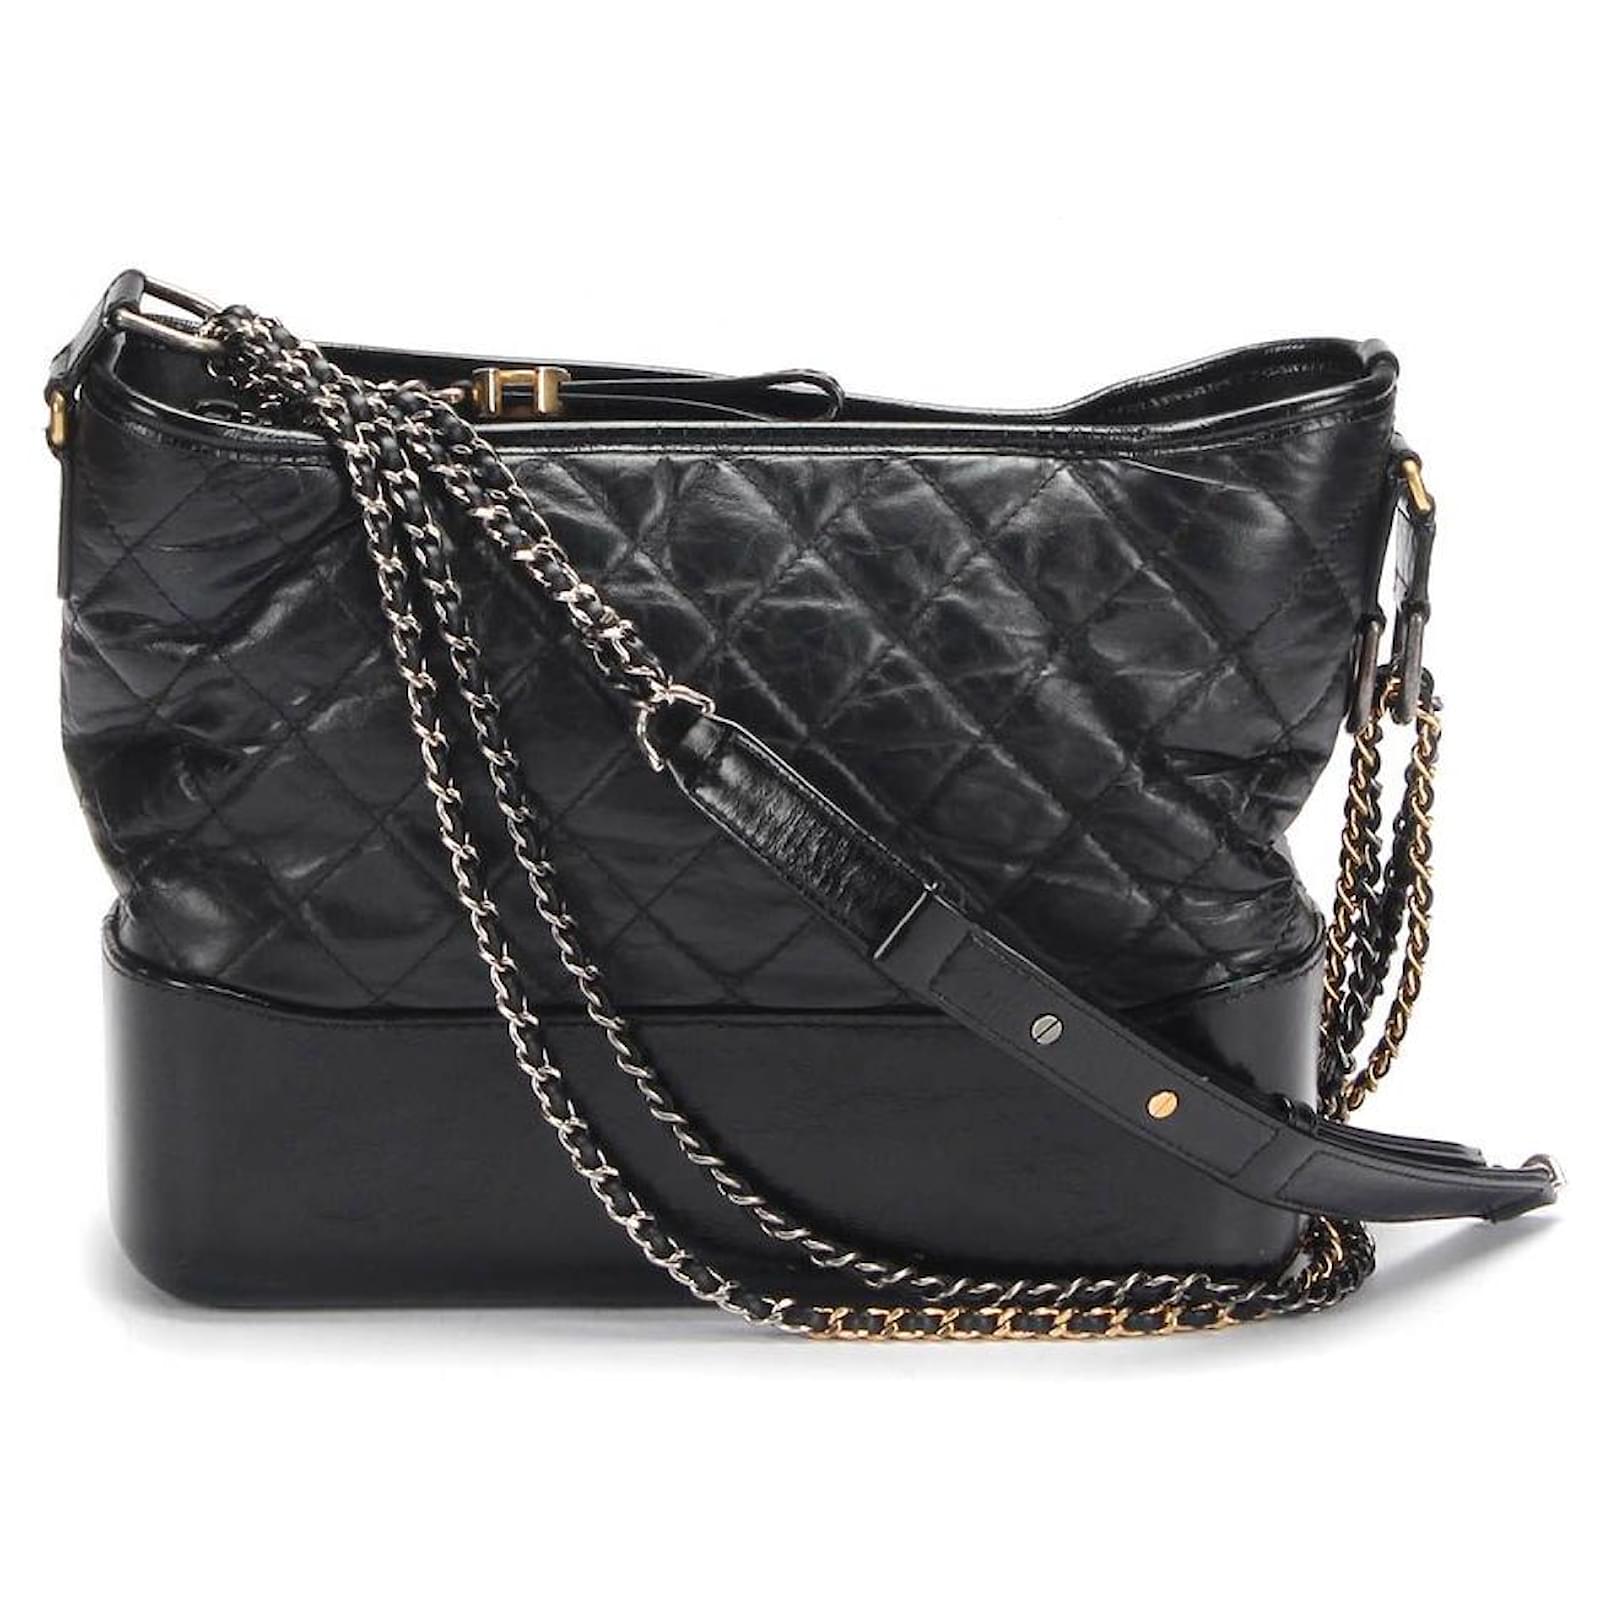 Chanel Gabrielle Hobo Bag Hobo Bag Black in Smooth Calfskin